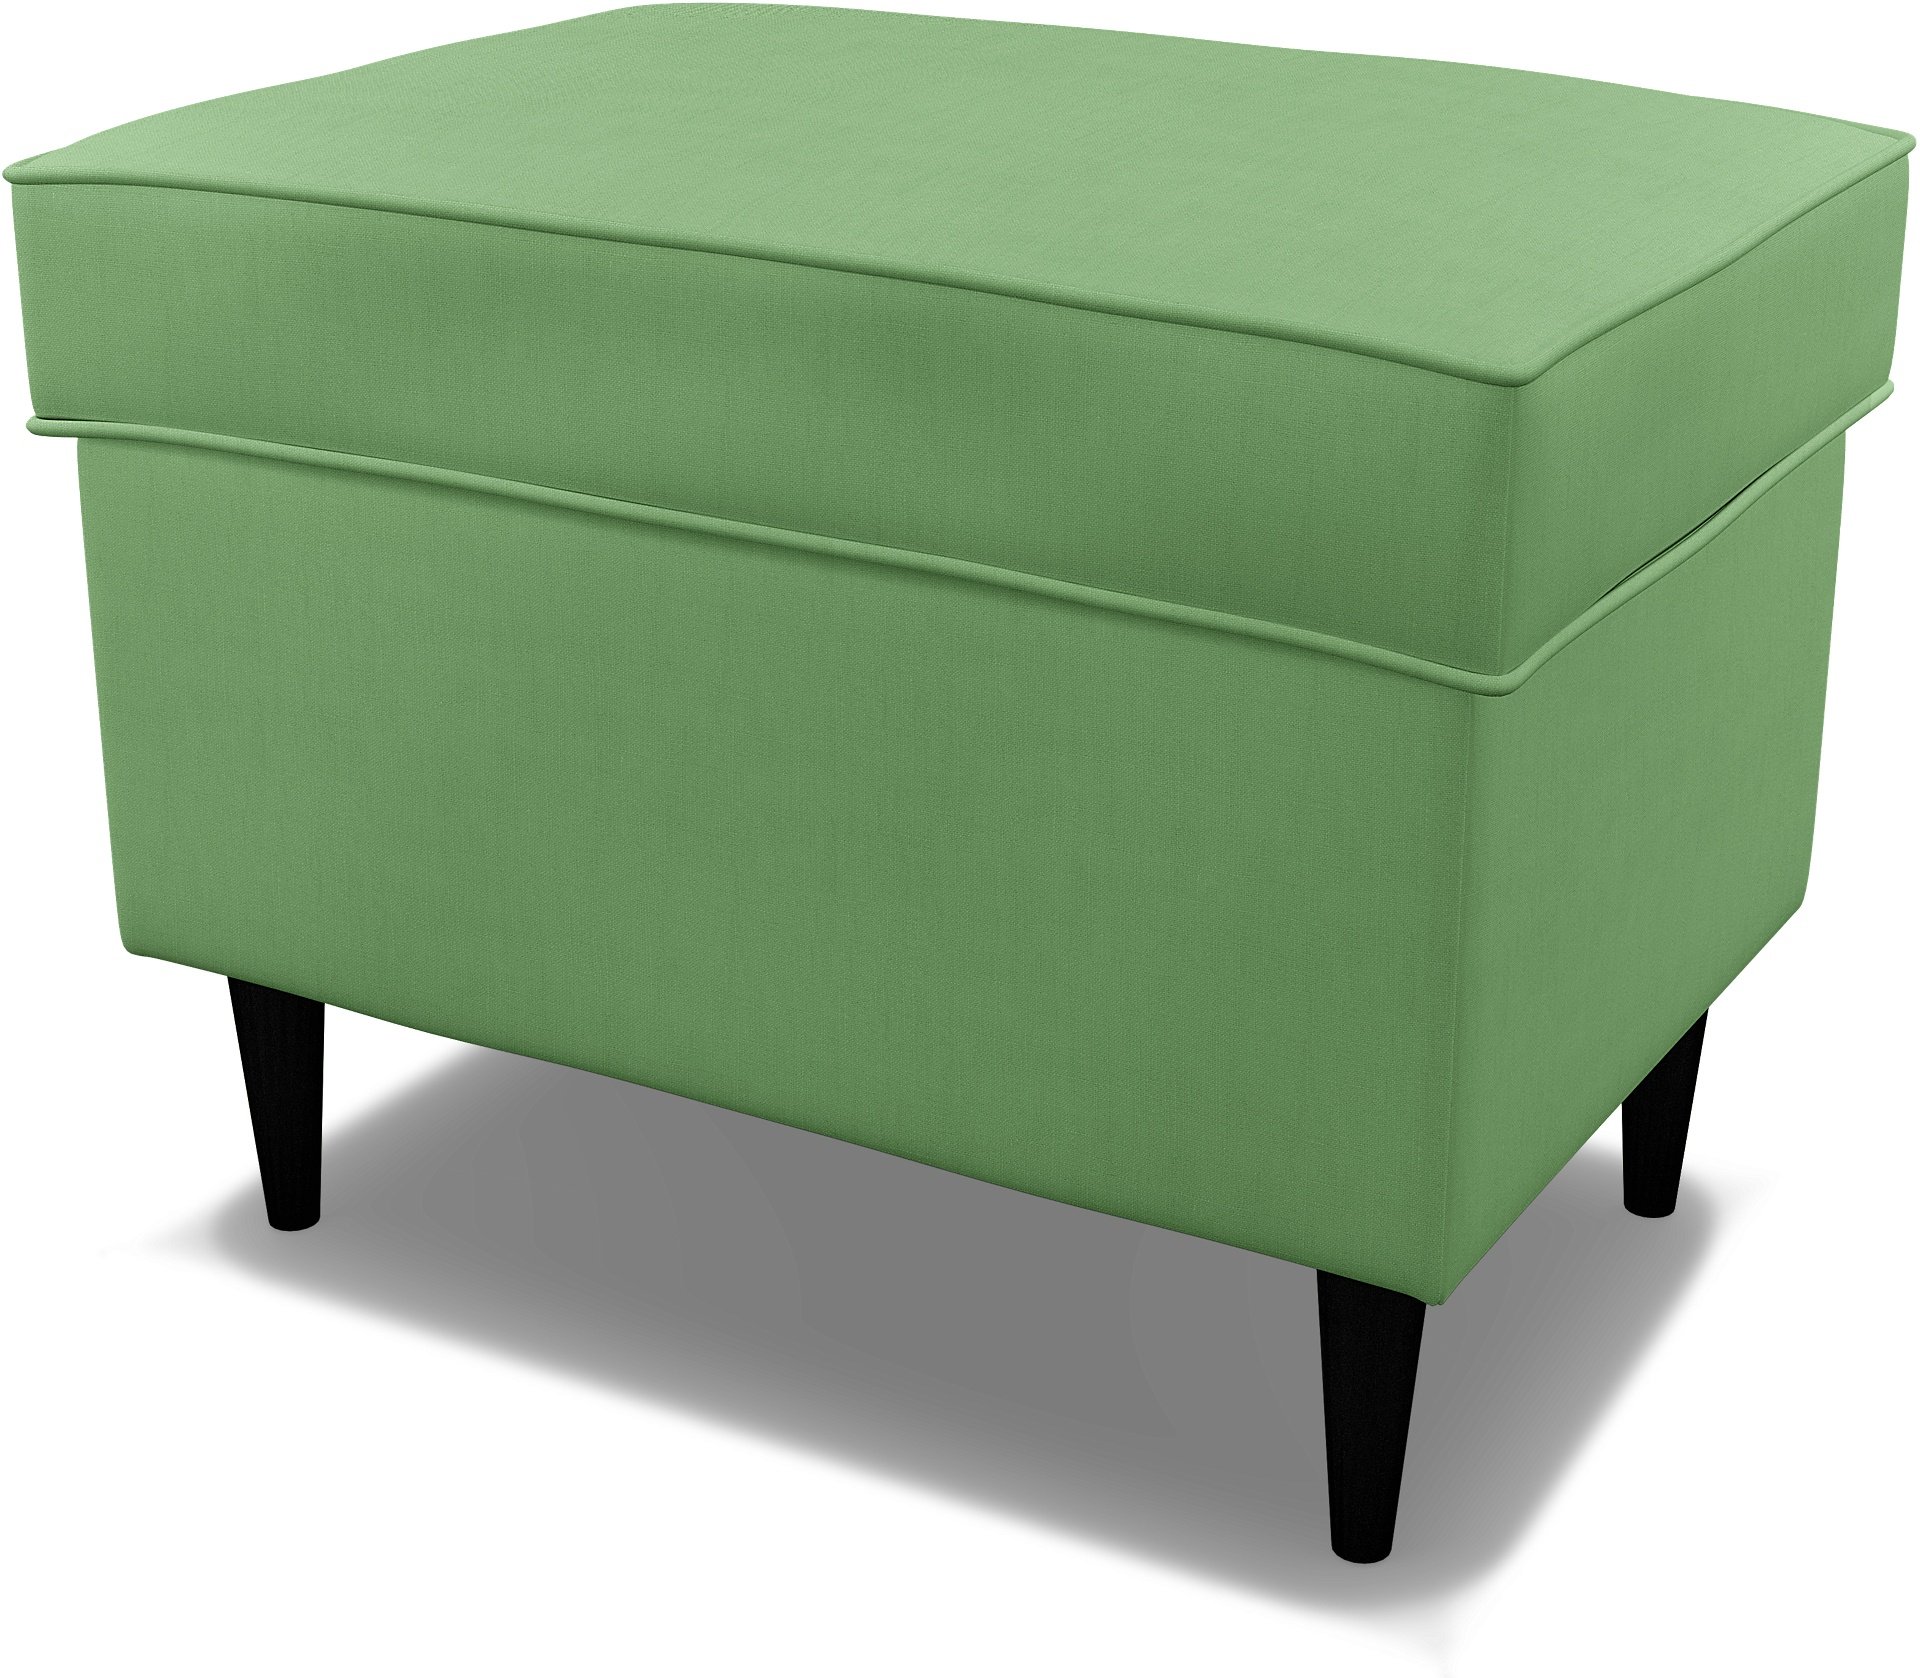 IKEA - Strandmon Footstool cover, Apple Green, Linen - Bemz